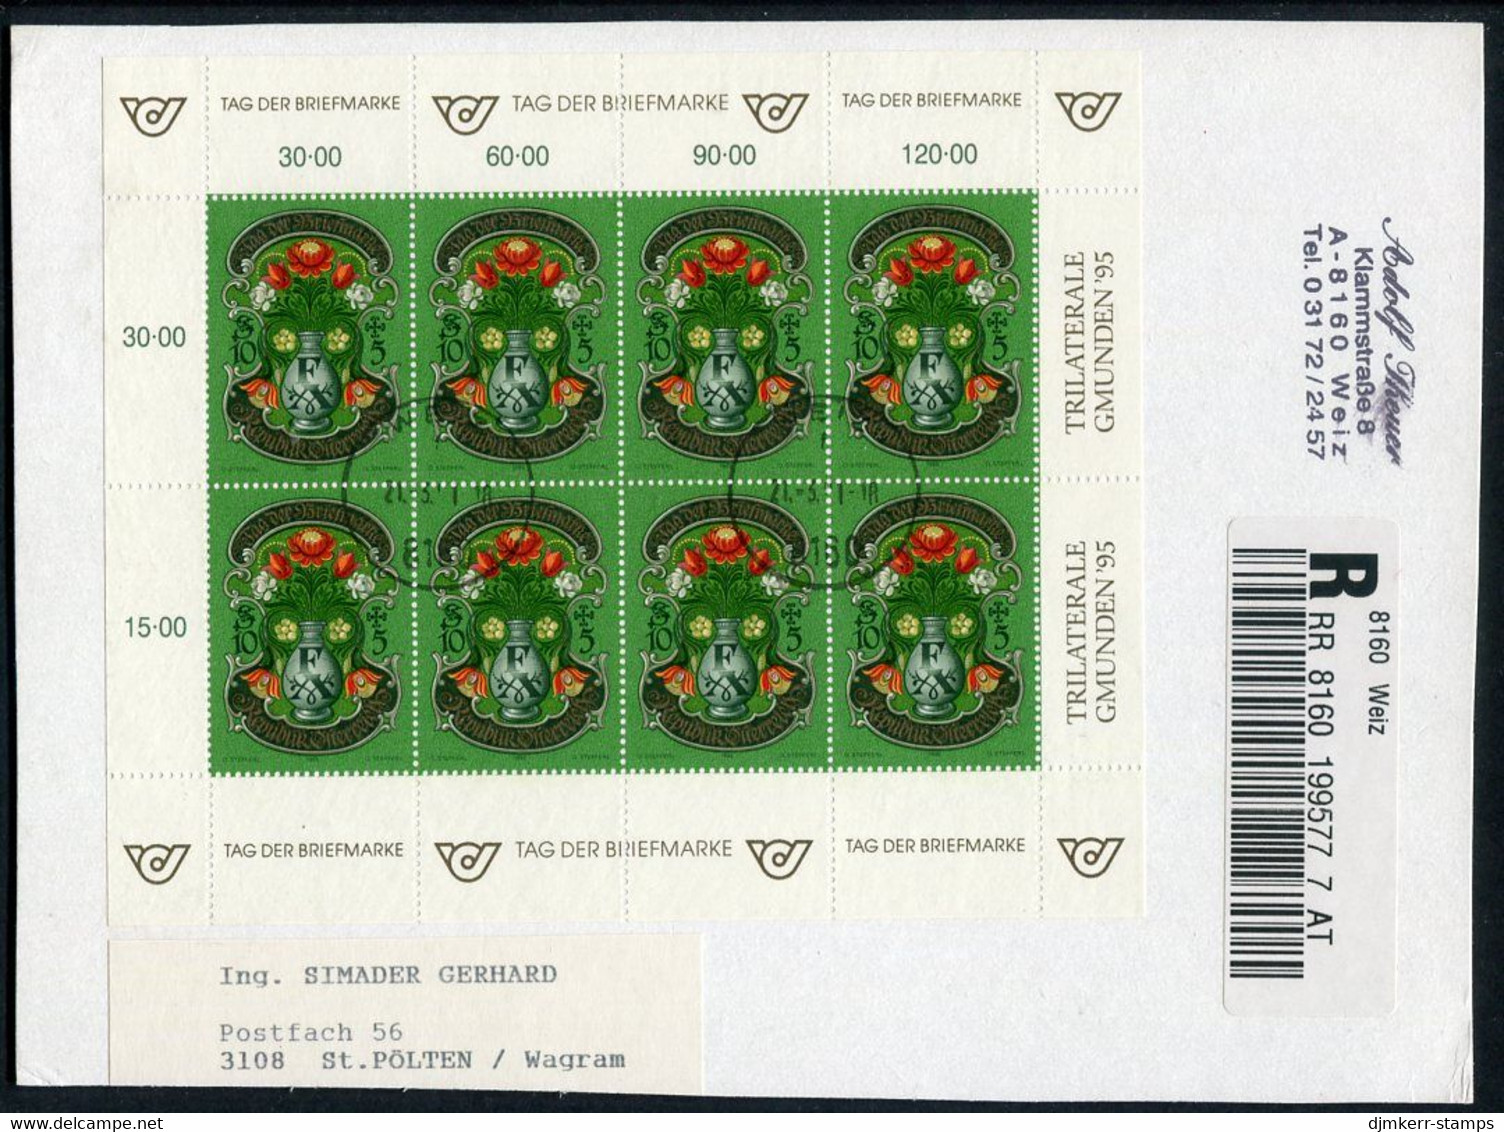 AUSTRIA 1995 Stamp Day Sheetlet, Postally Used On Registered Card.  Michel 2158 Kb - Blocs & Hojas